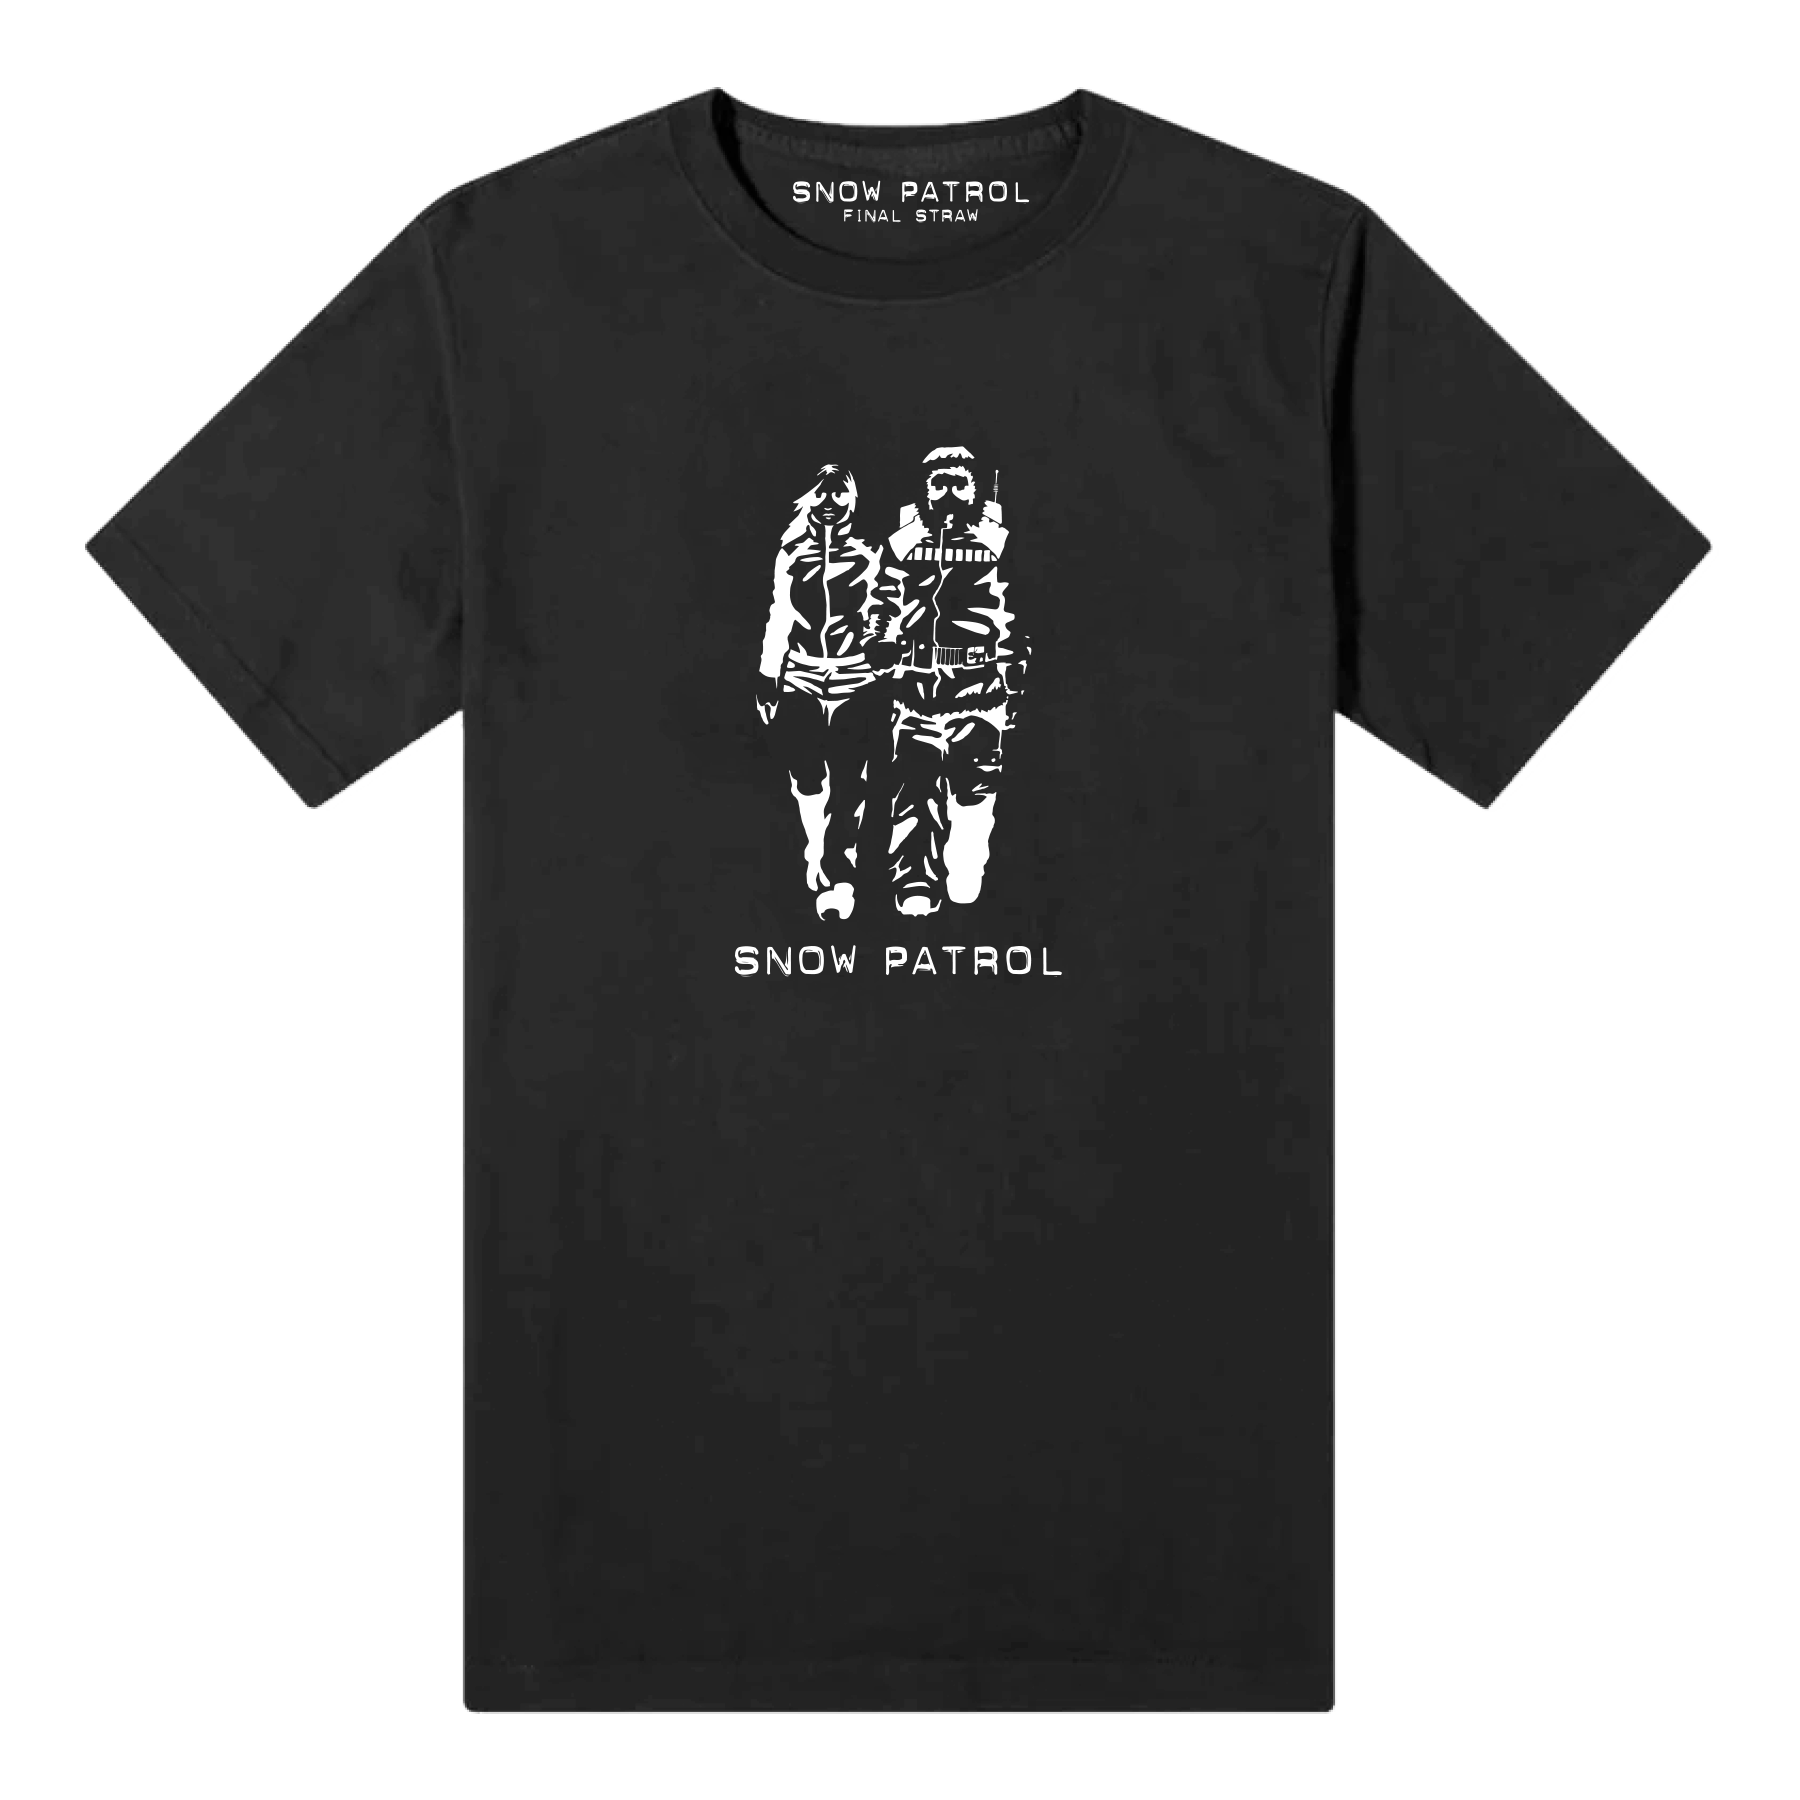 Snow Patrol - Snow Patrol Black Final Straw T-Shirt (20th Anniversary Edition) 